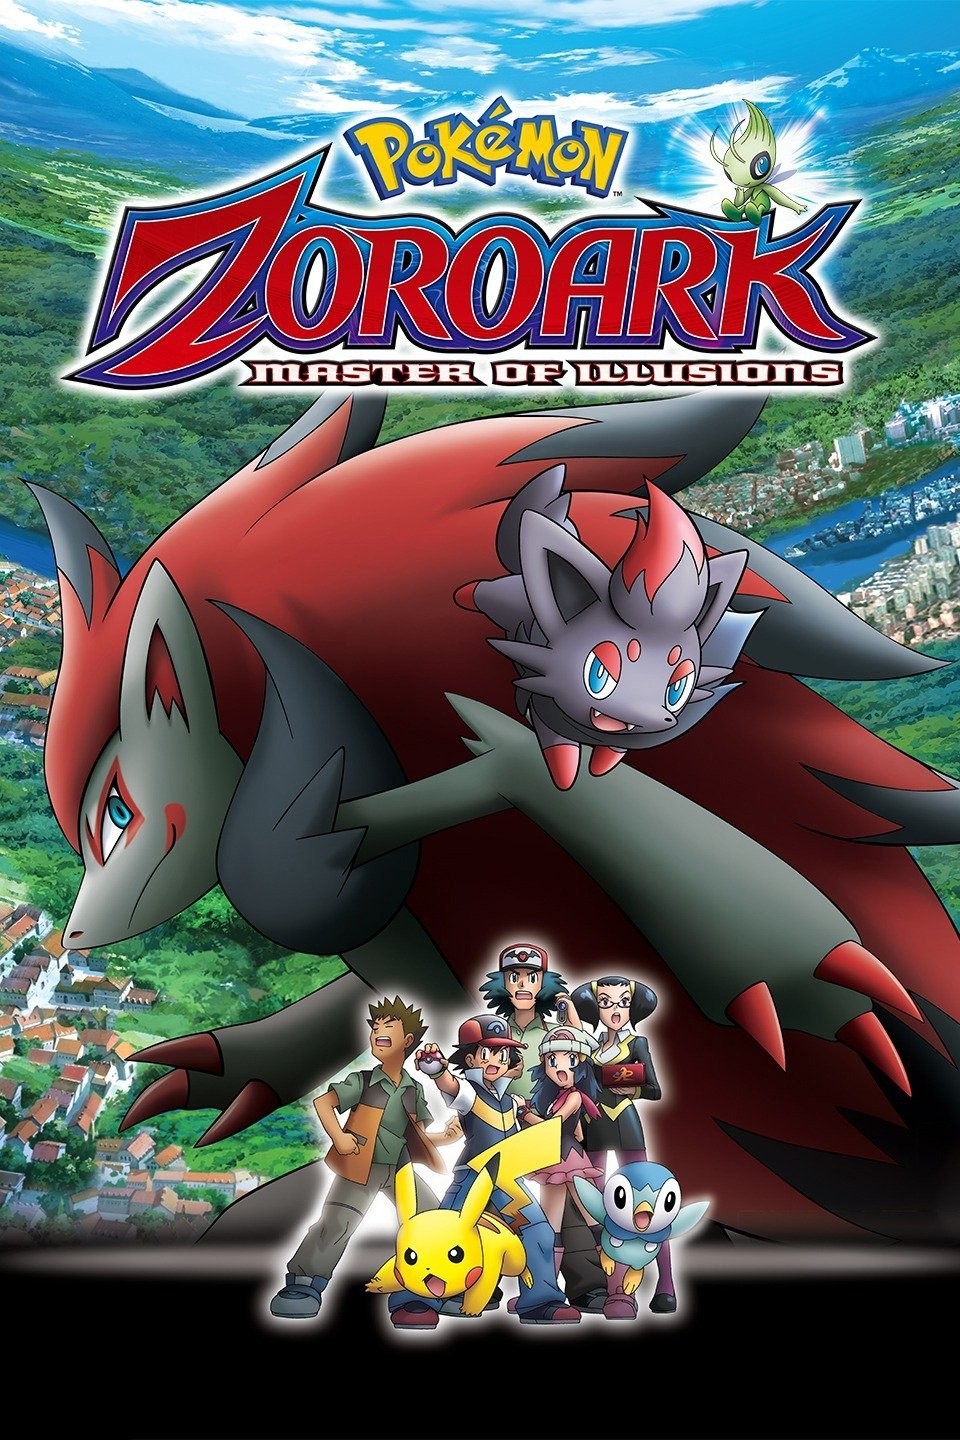 Pokémon: Giratina and the Sky Warrior - Rotten Tomatoes